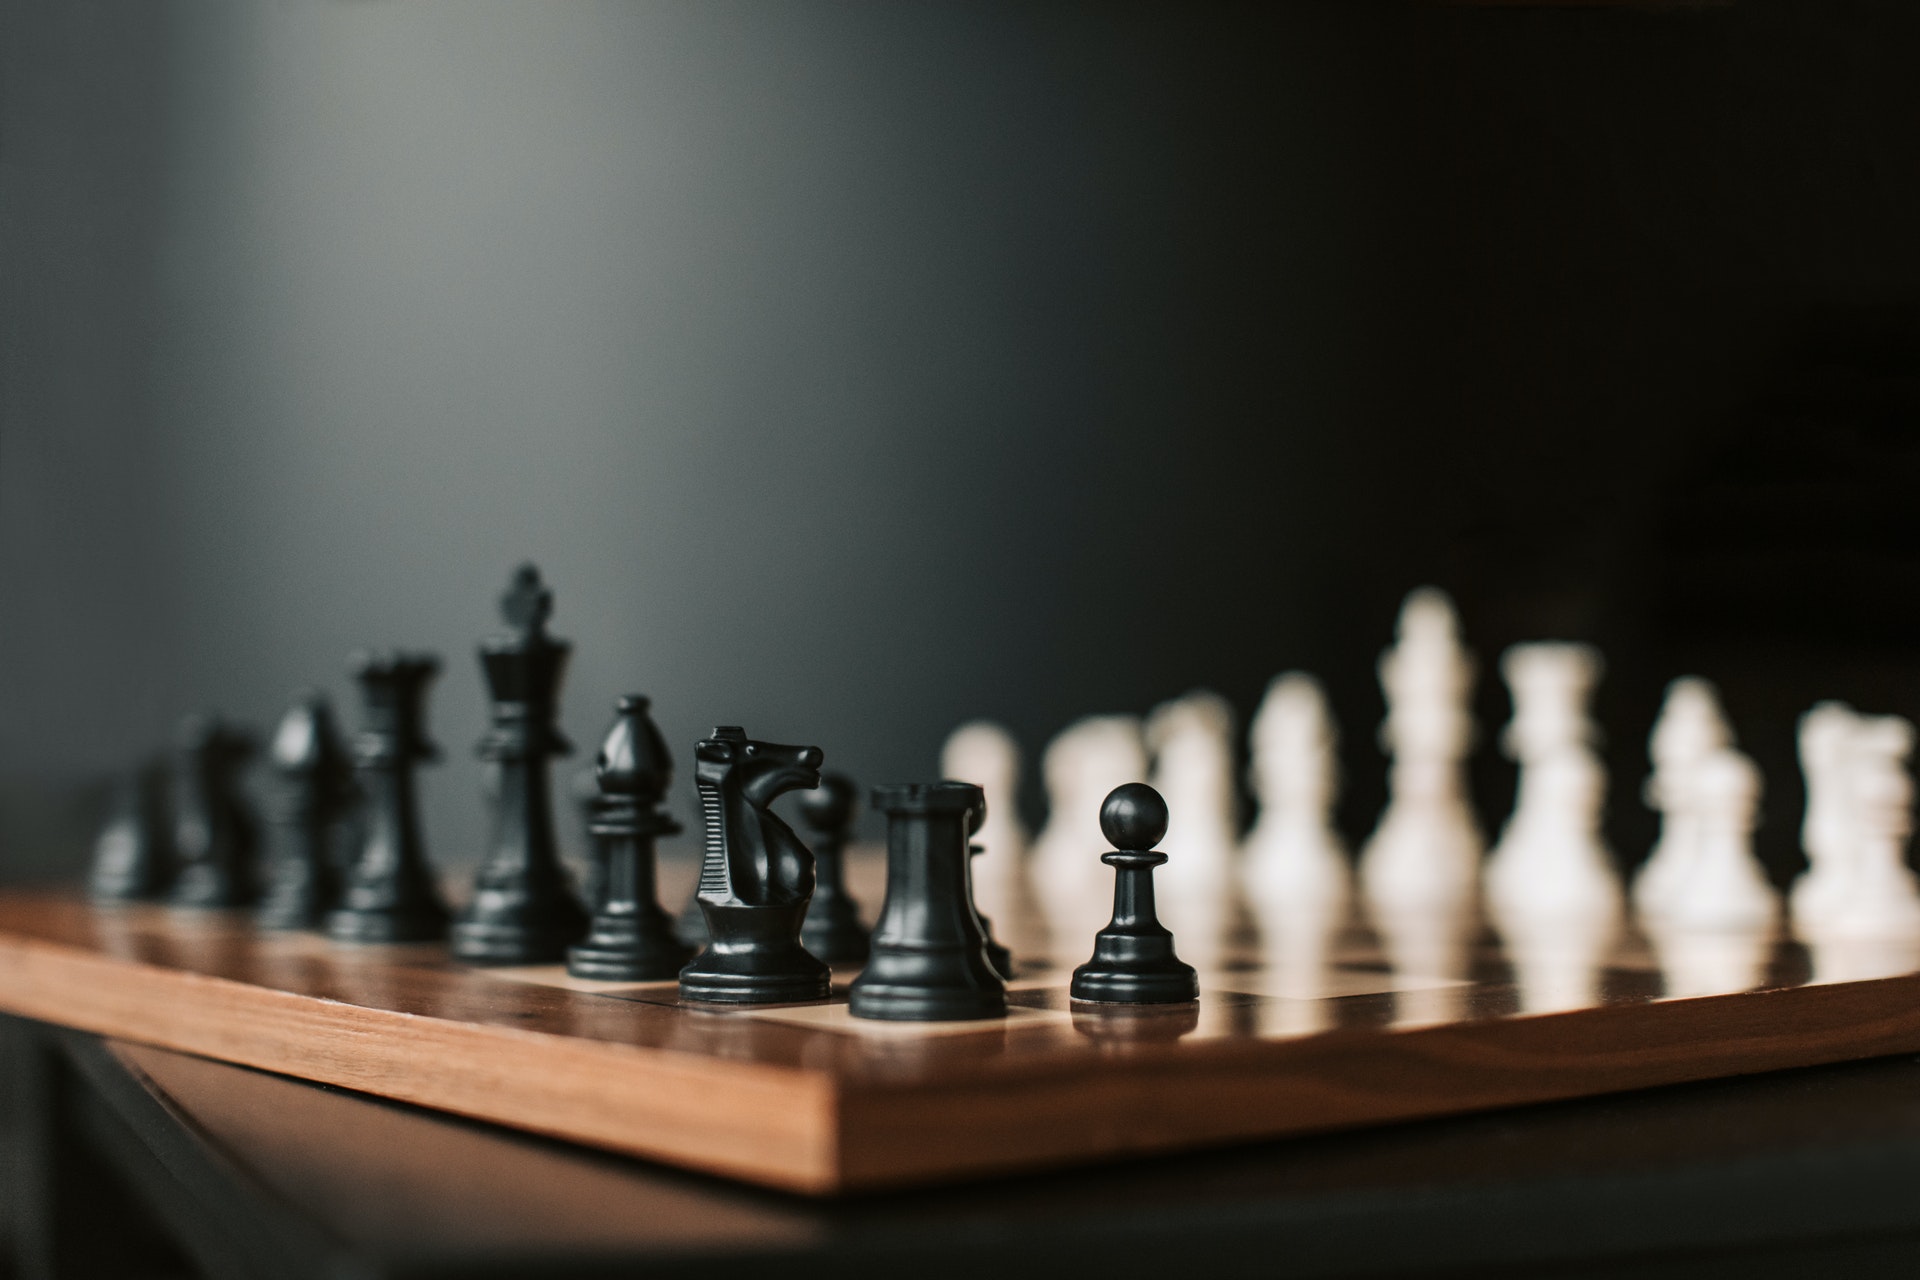 Chess shows teamwork between pieces